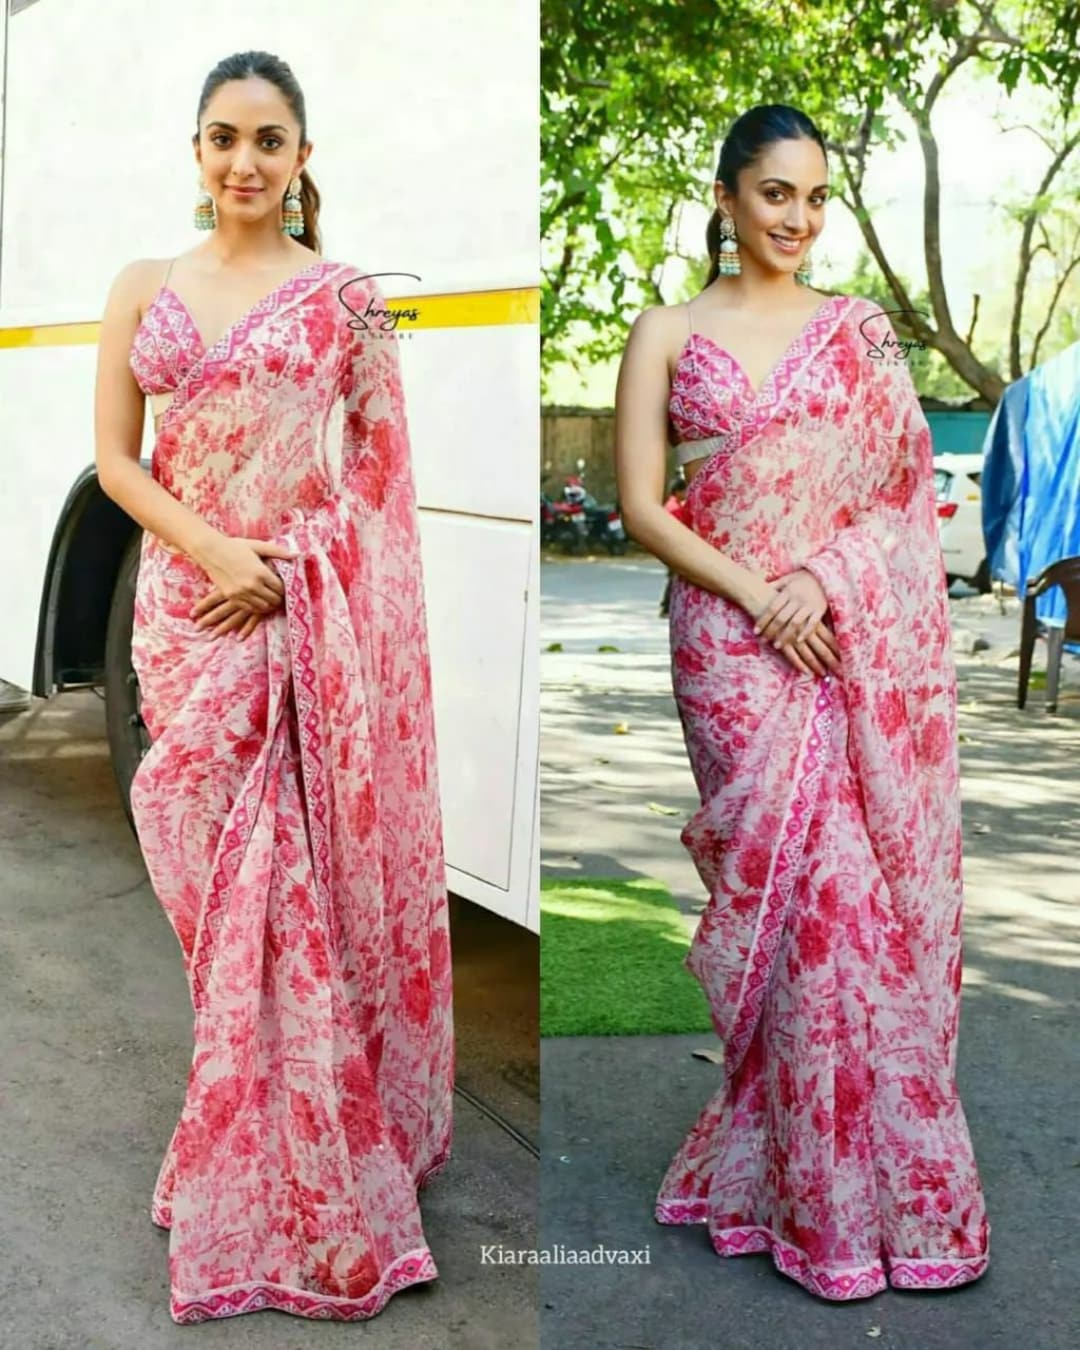 Buy Bollywood Actress Kiara Advani in Pink Georgette Sari Saree ...